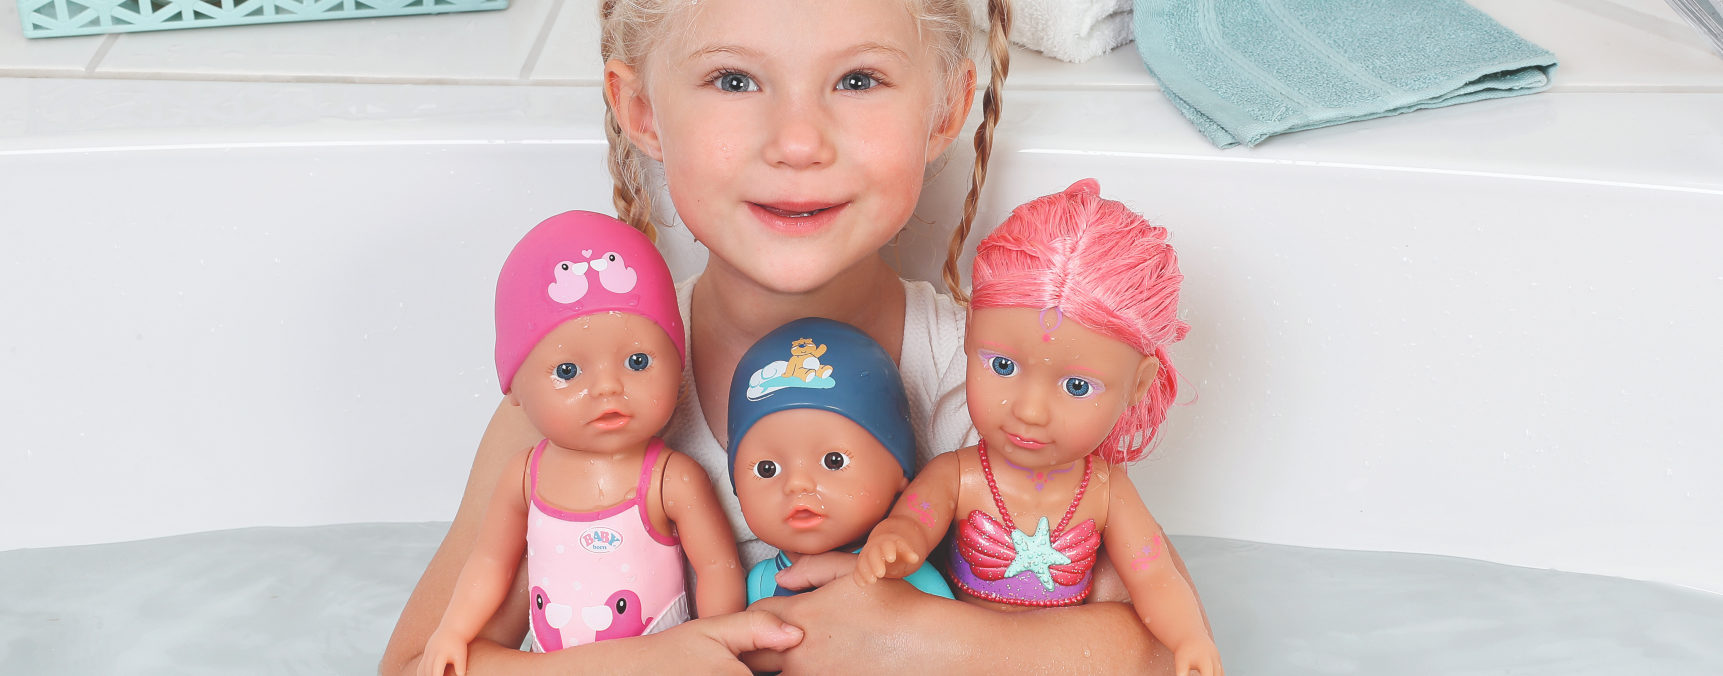 help gain children's water confidence with BABY born swim dolls